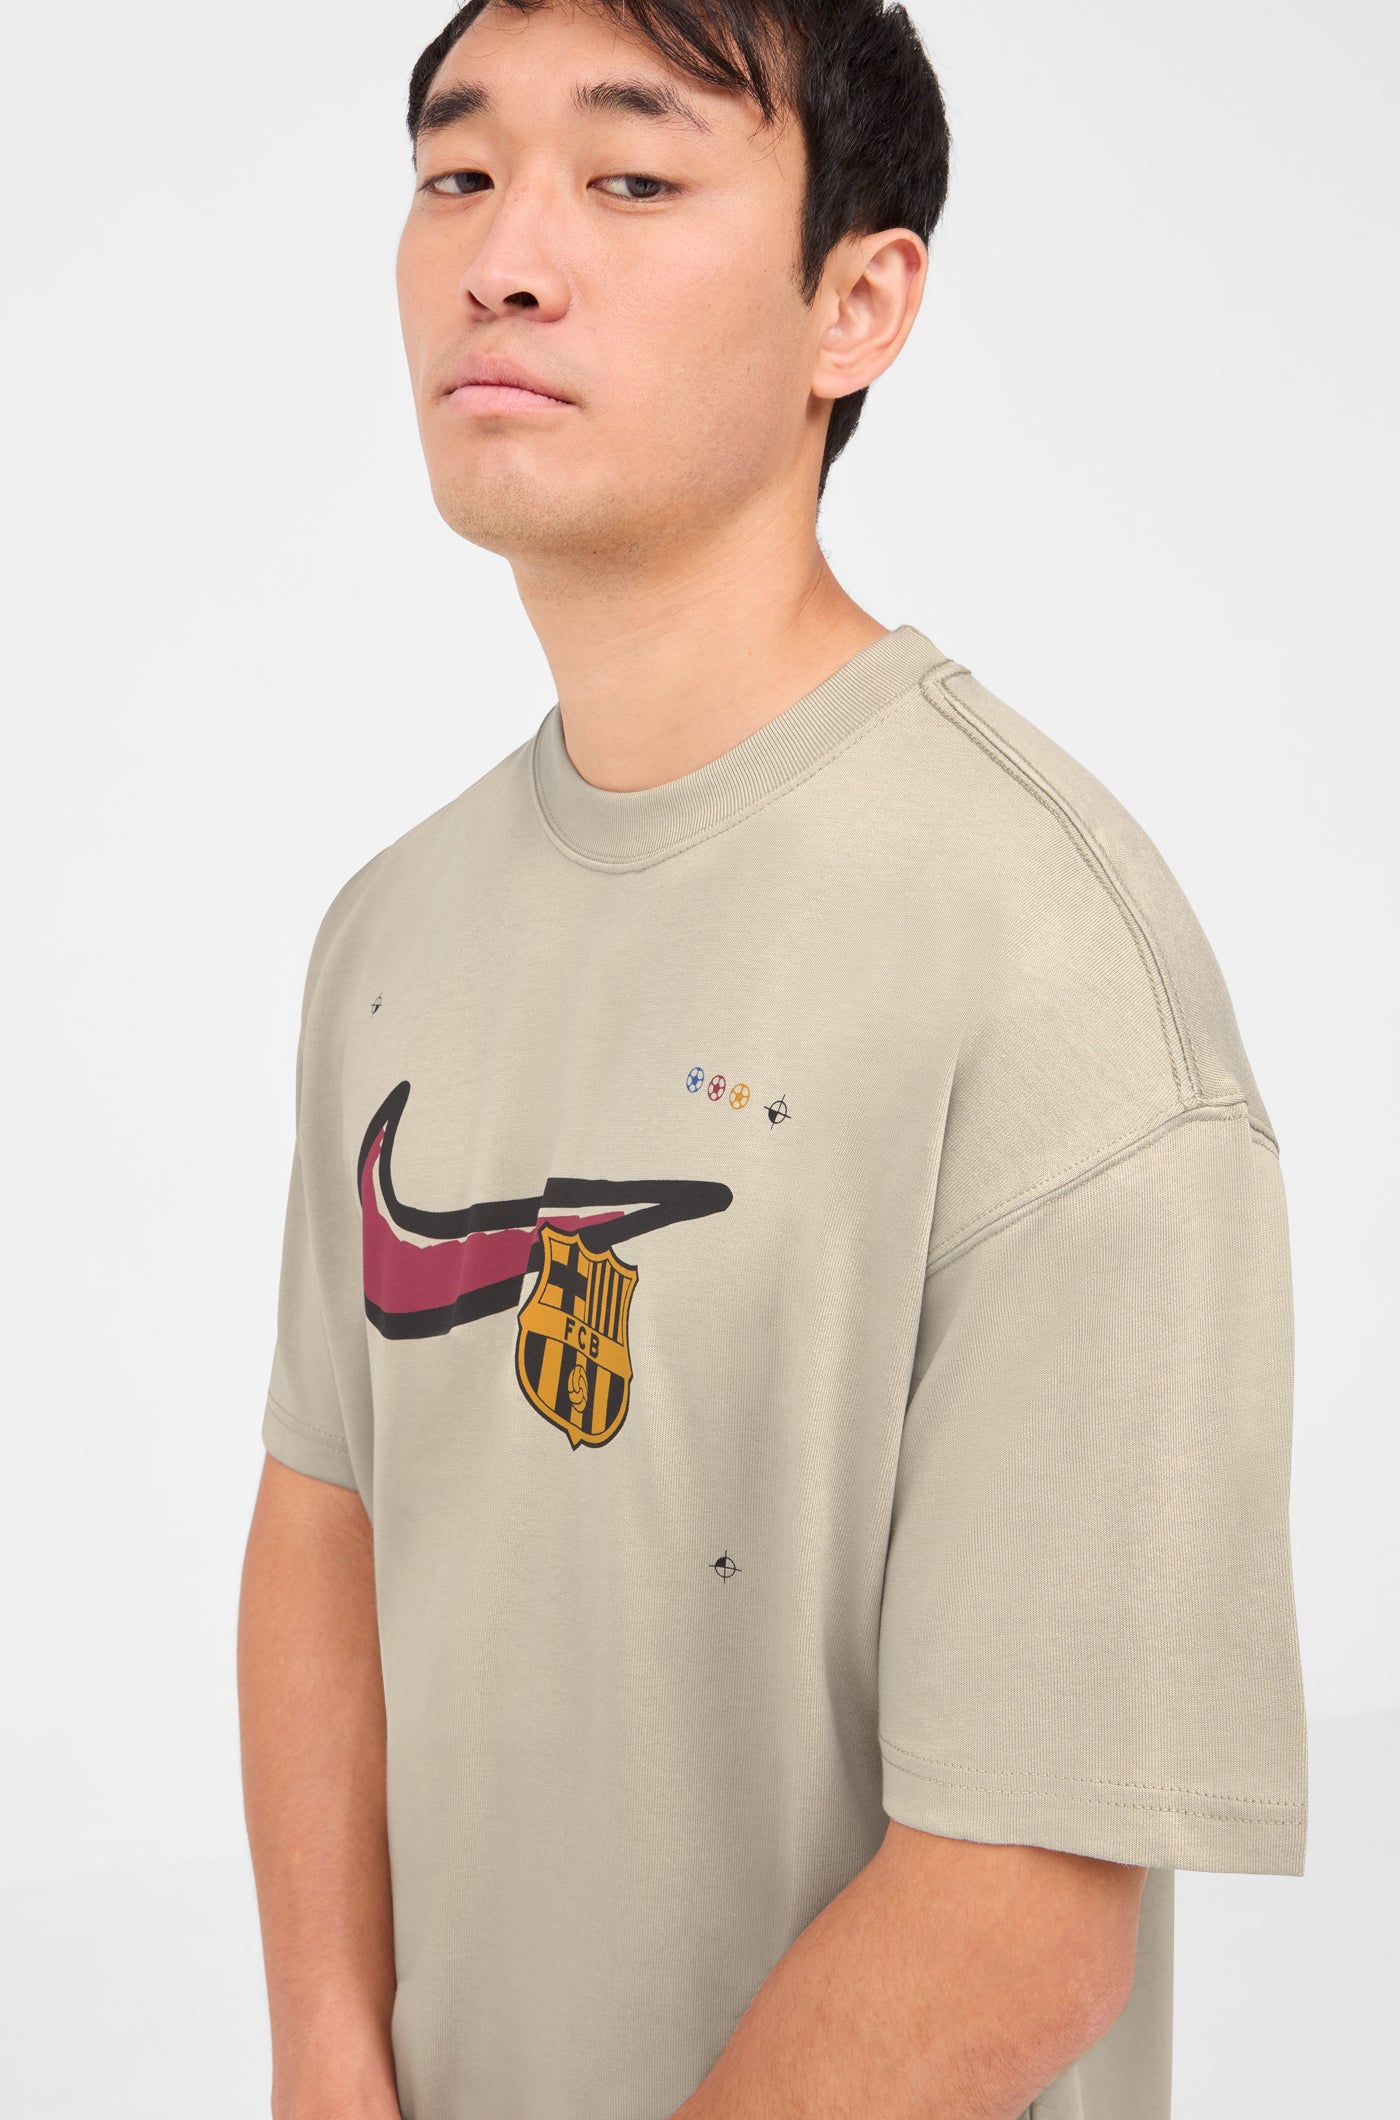  T-Shirt mit Rückenaufdruck Barça Nike